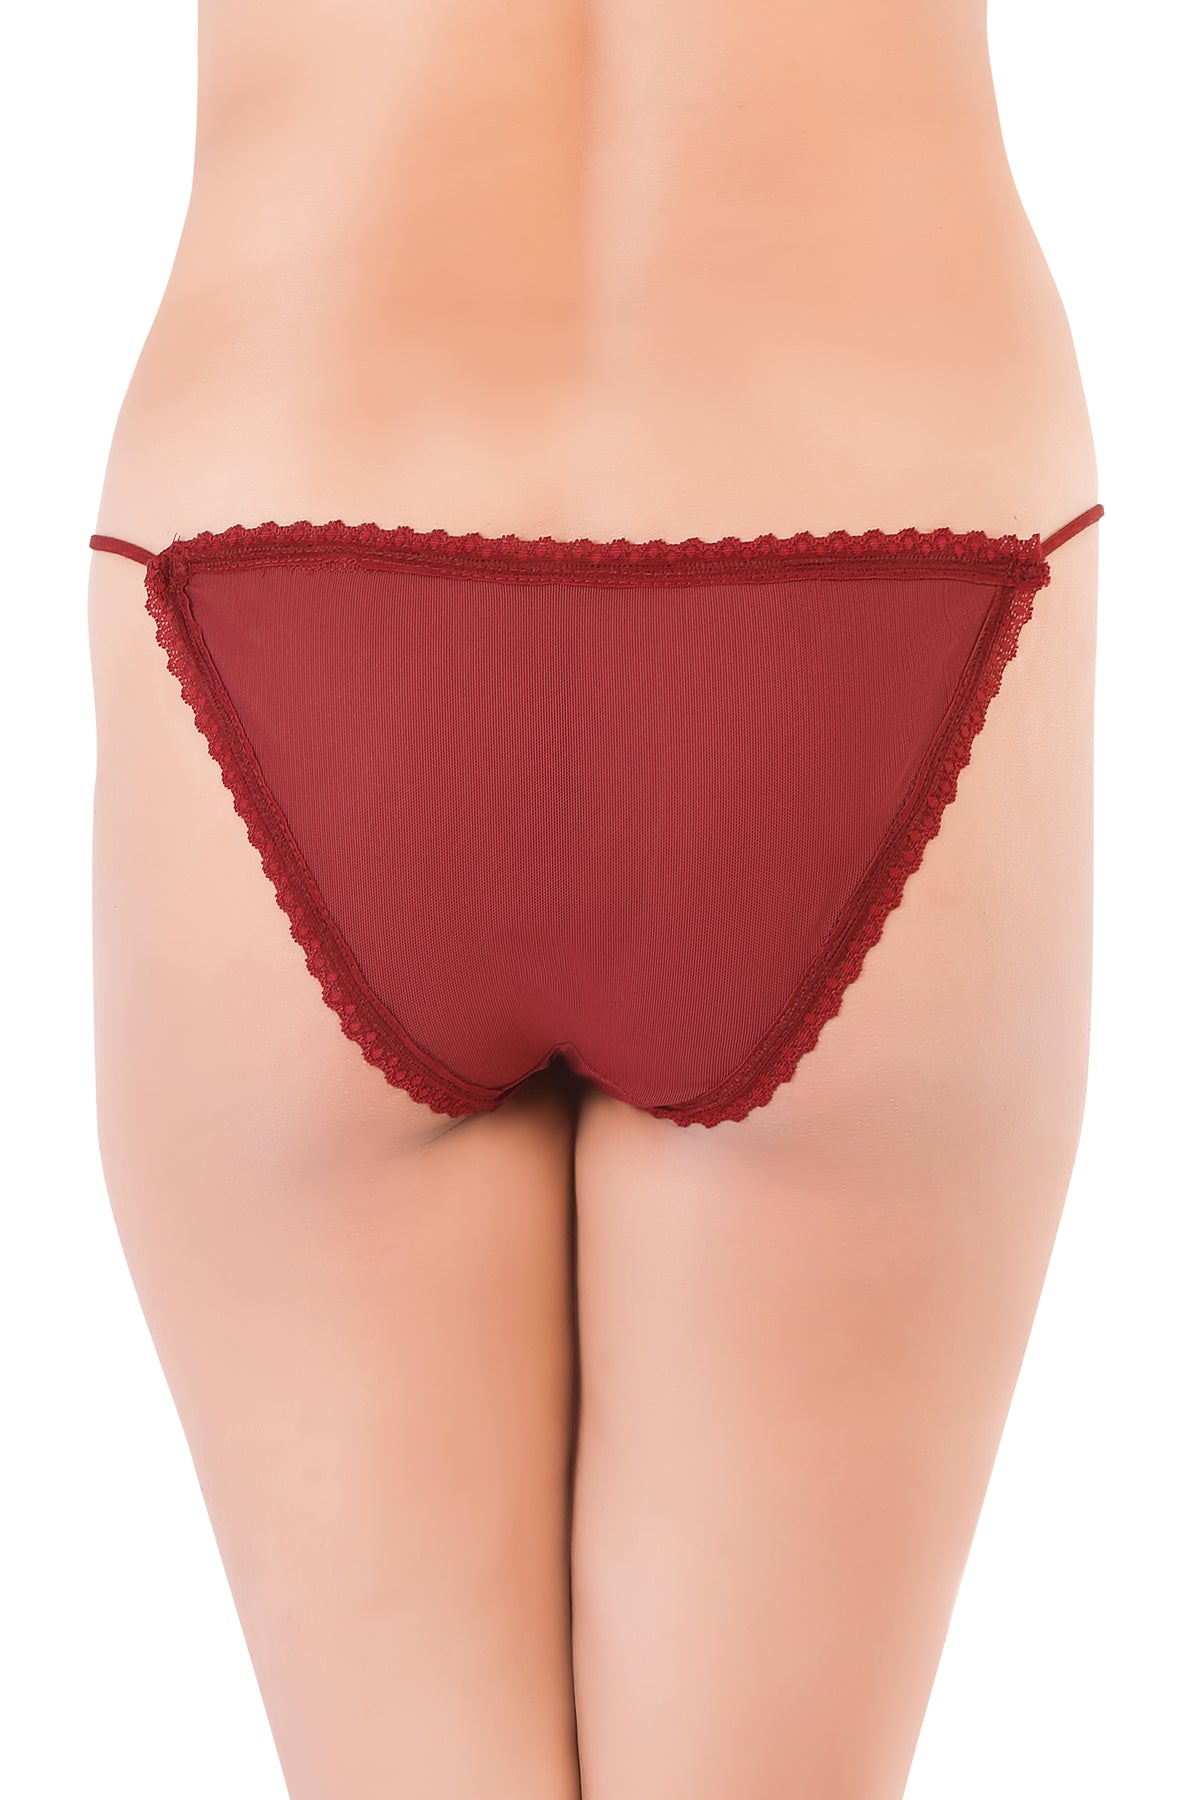 Bruchi Club Women's Low Rise Sleek String Wine Red Bikini Panty